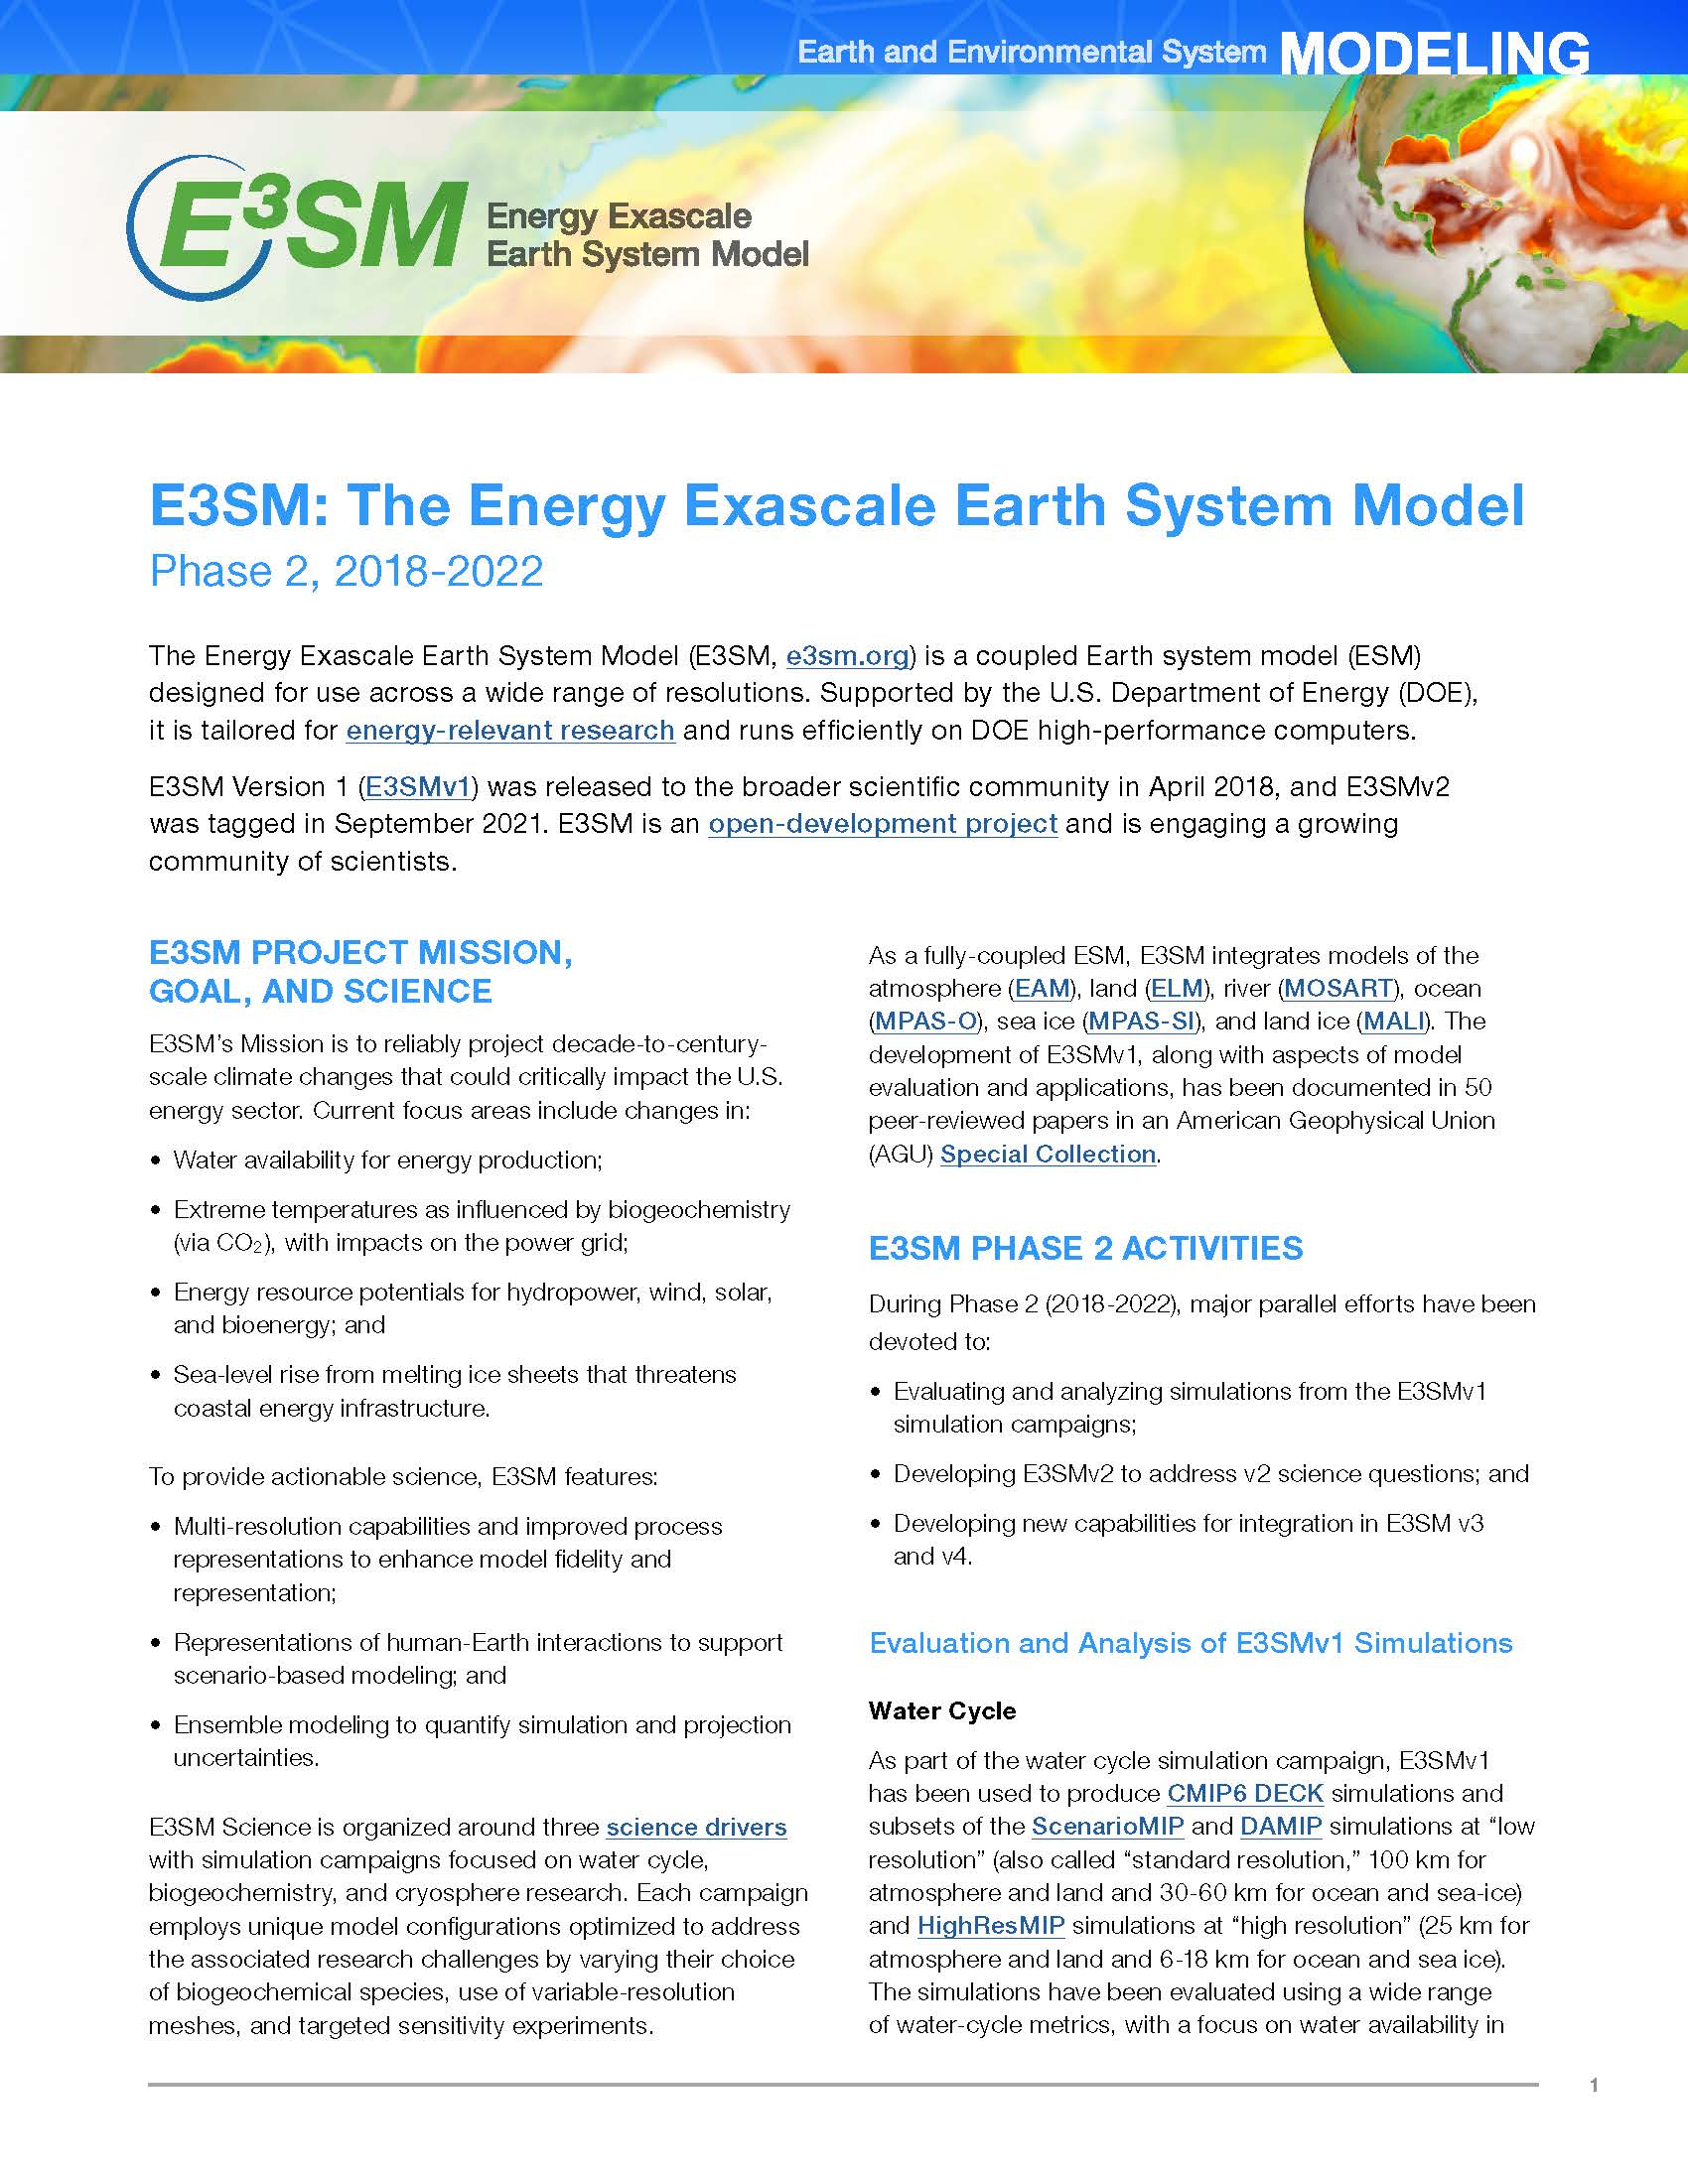 2021 E3SM Brochure, E3SM Phase 2